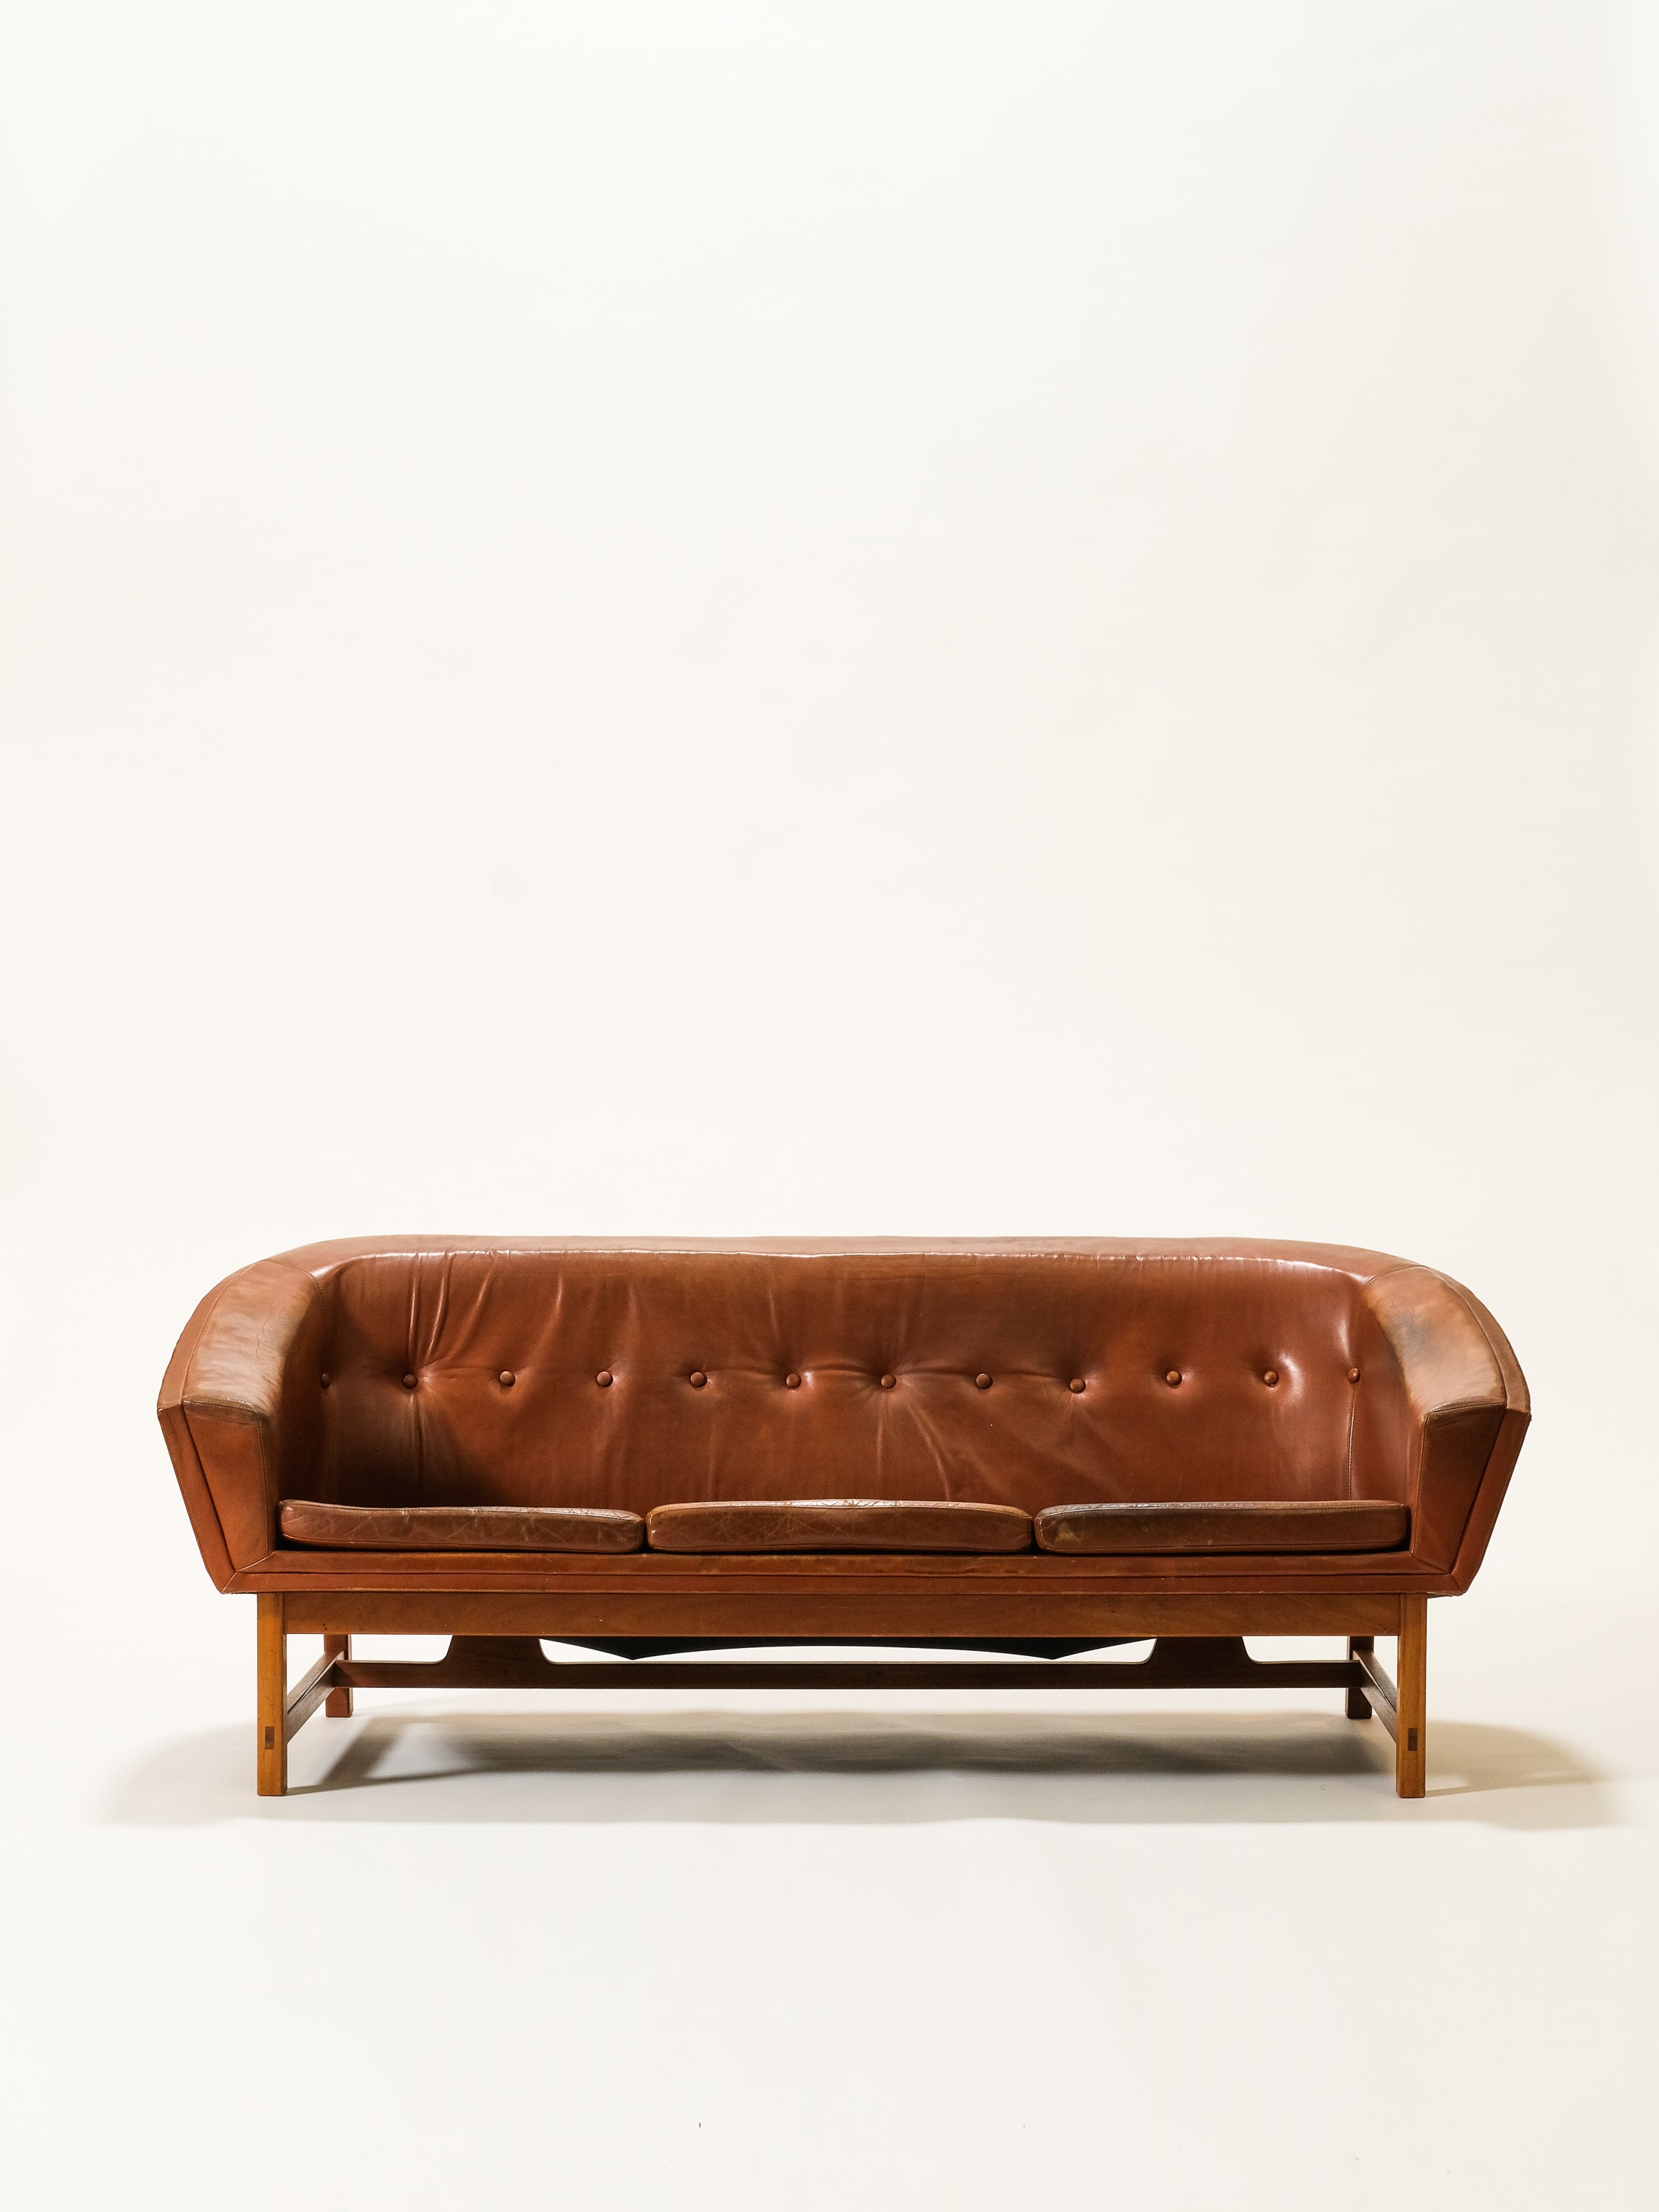 Model "Corona" Leather Sofa by Lennart Bender for Ulferts Möbler, Sweden, 1960s